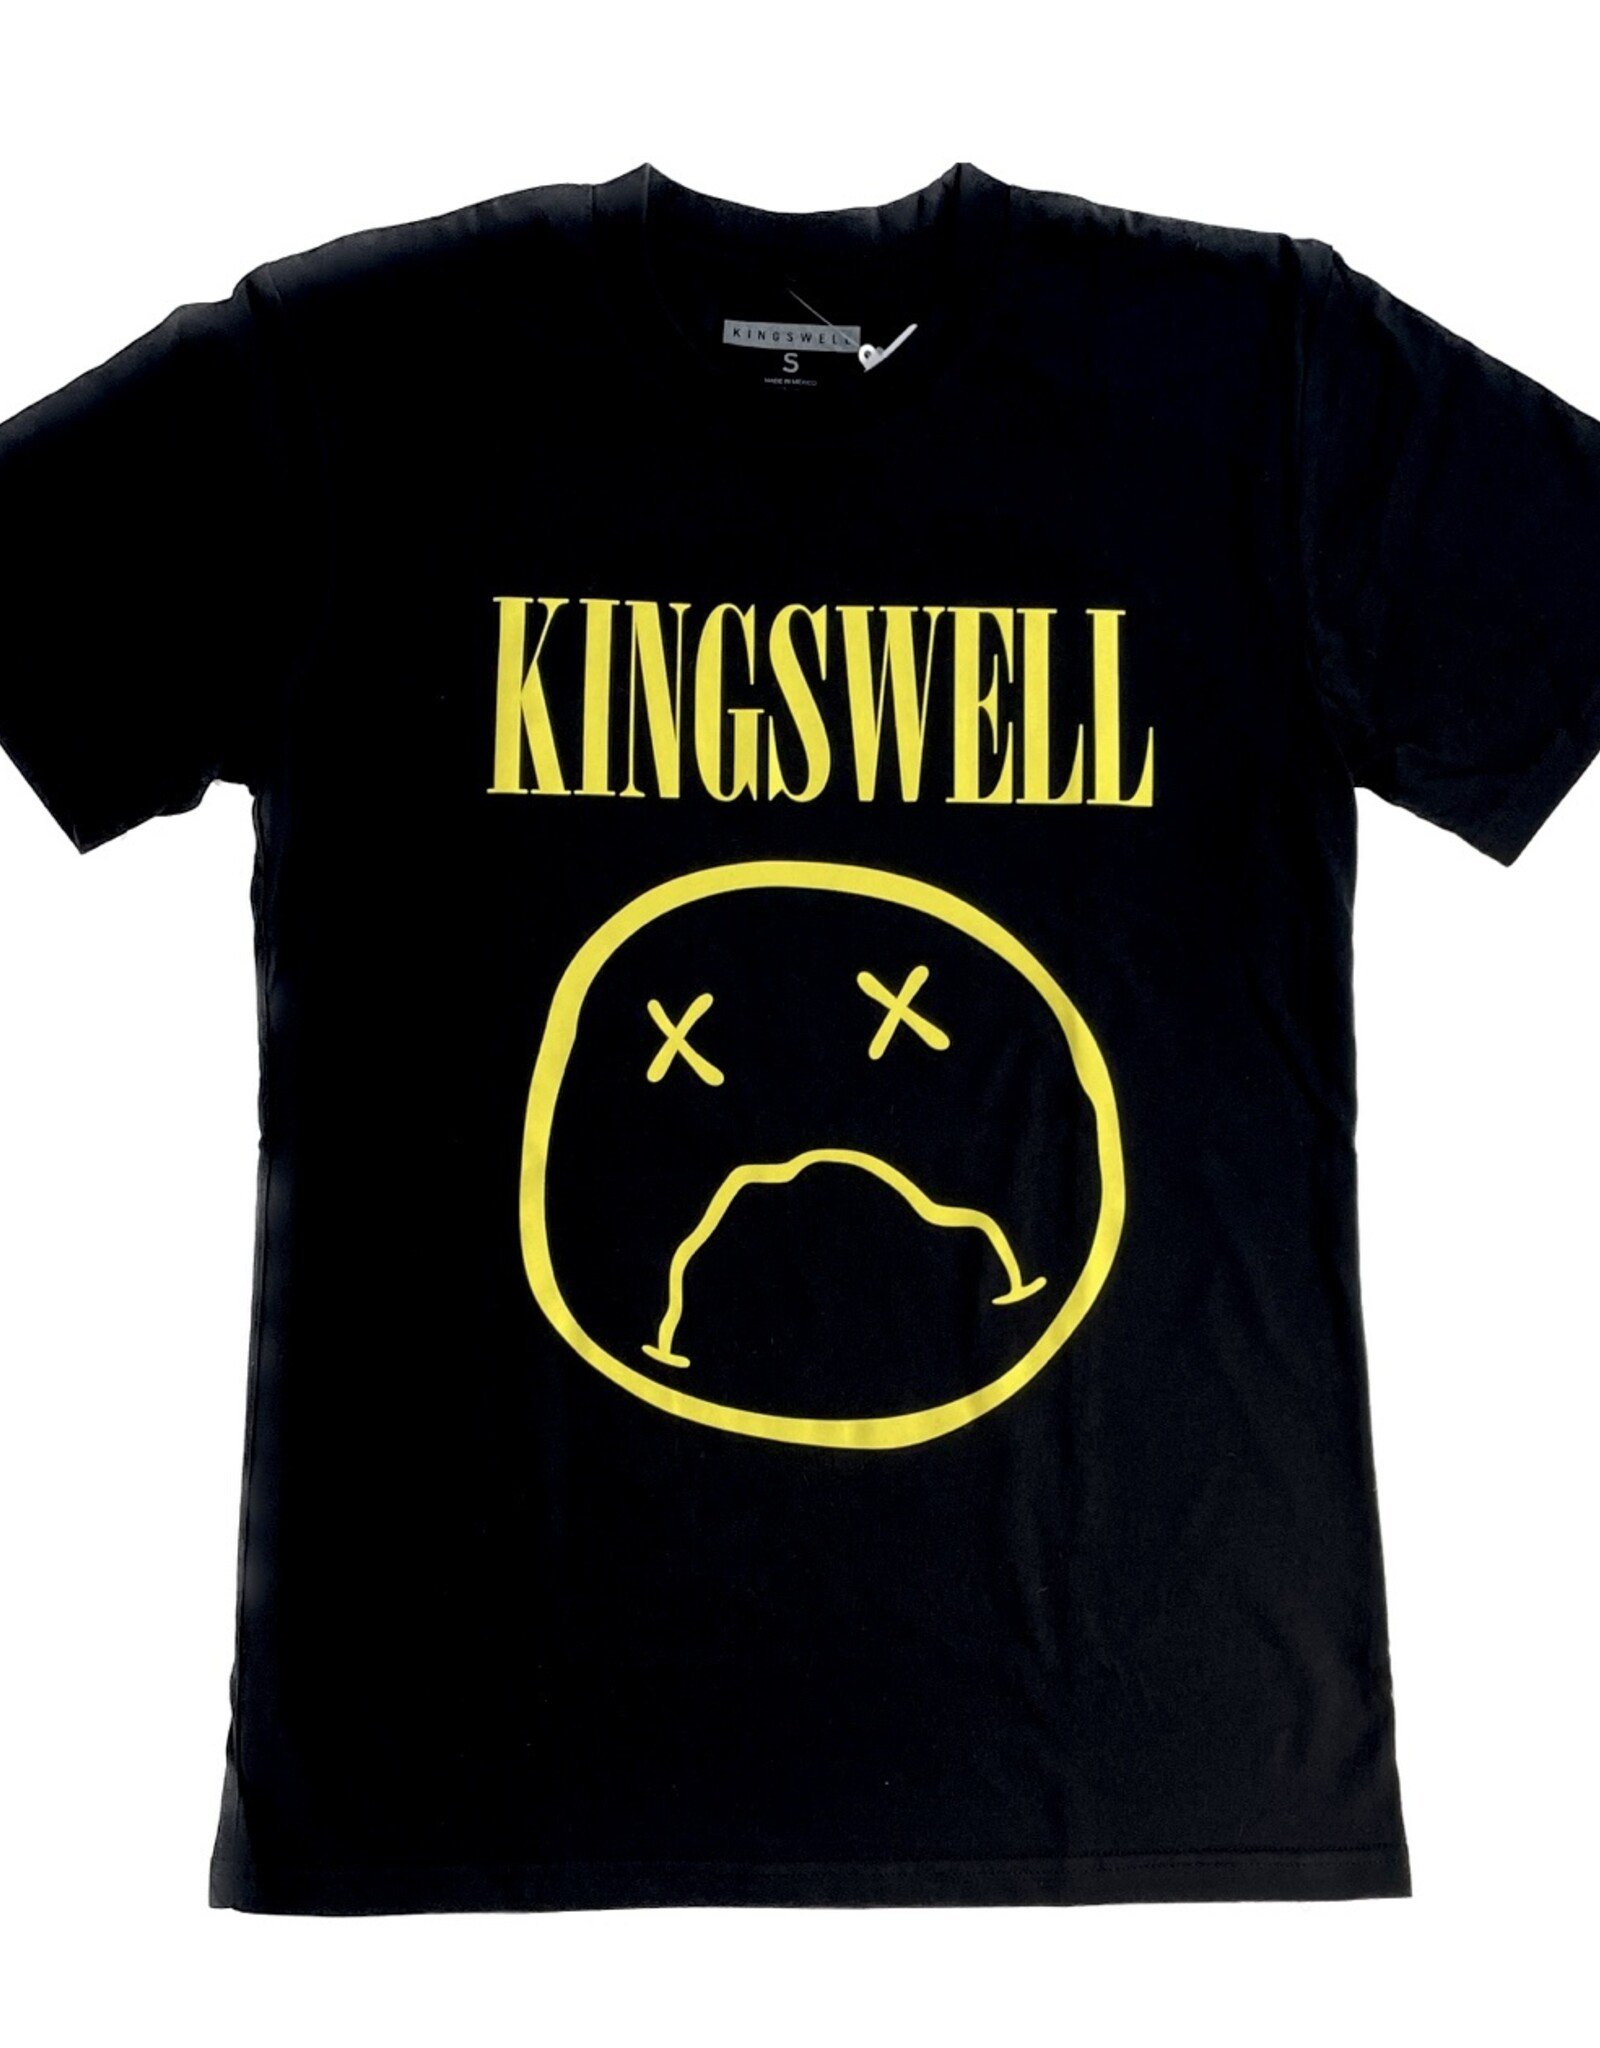 KINGSWELL KINGSWELL DUMBWELL S/S TEE - BLACK